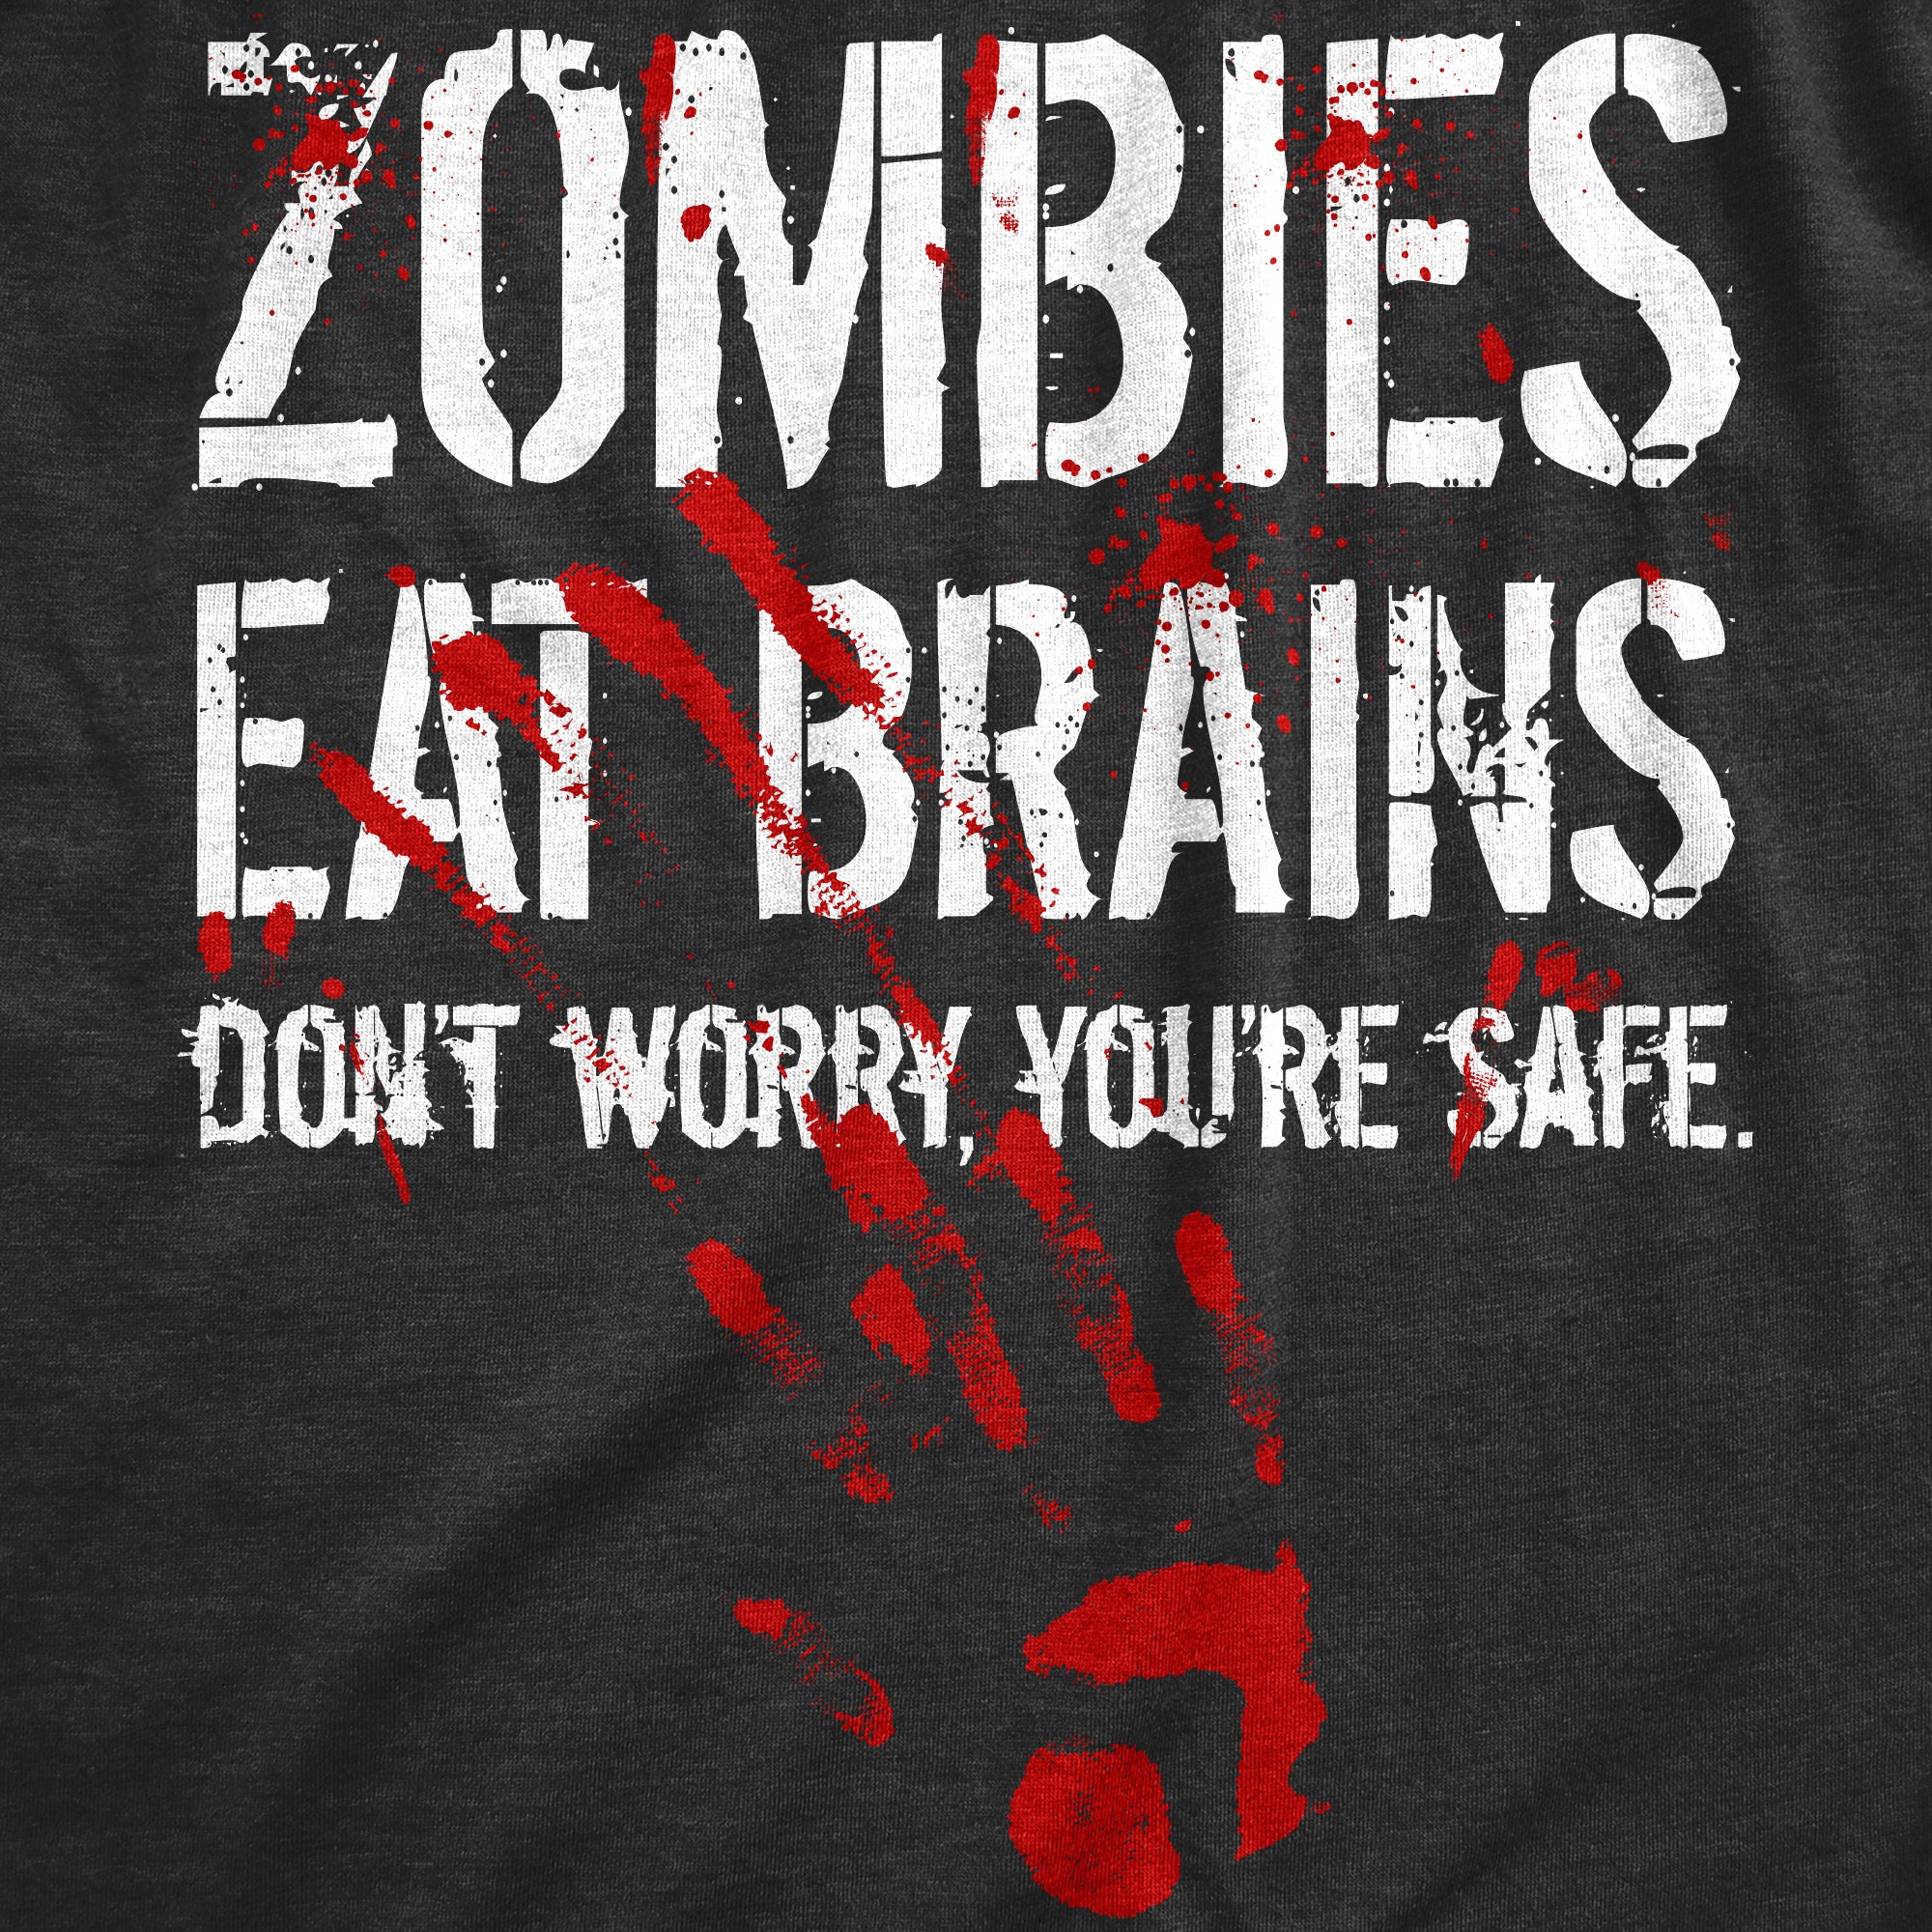 Funny Black 2 Color Print Zombies Eat Brains Multicolor print Mens T Shirt Nerdy Halloween Zombie Sarcastic Tee